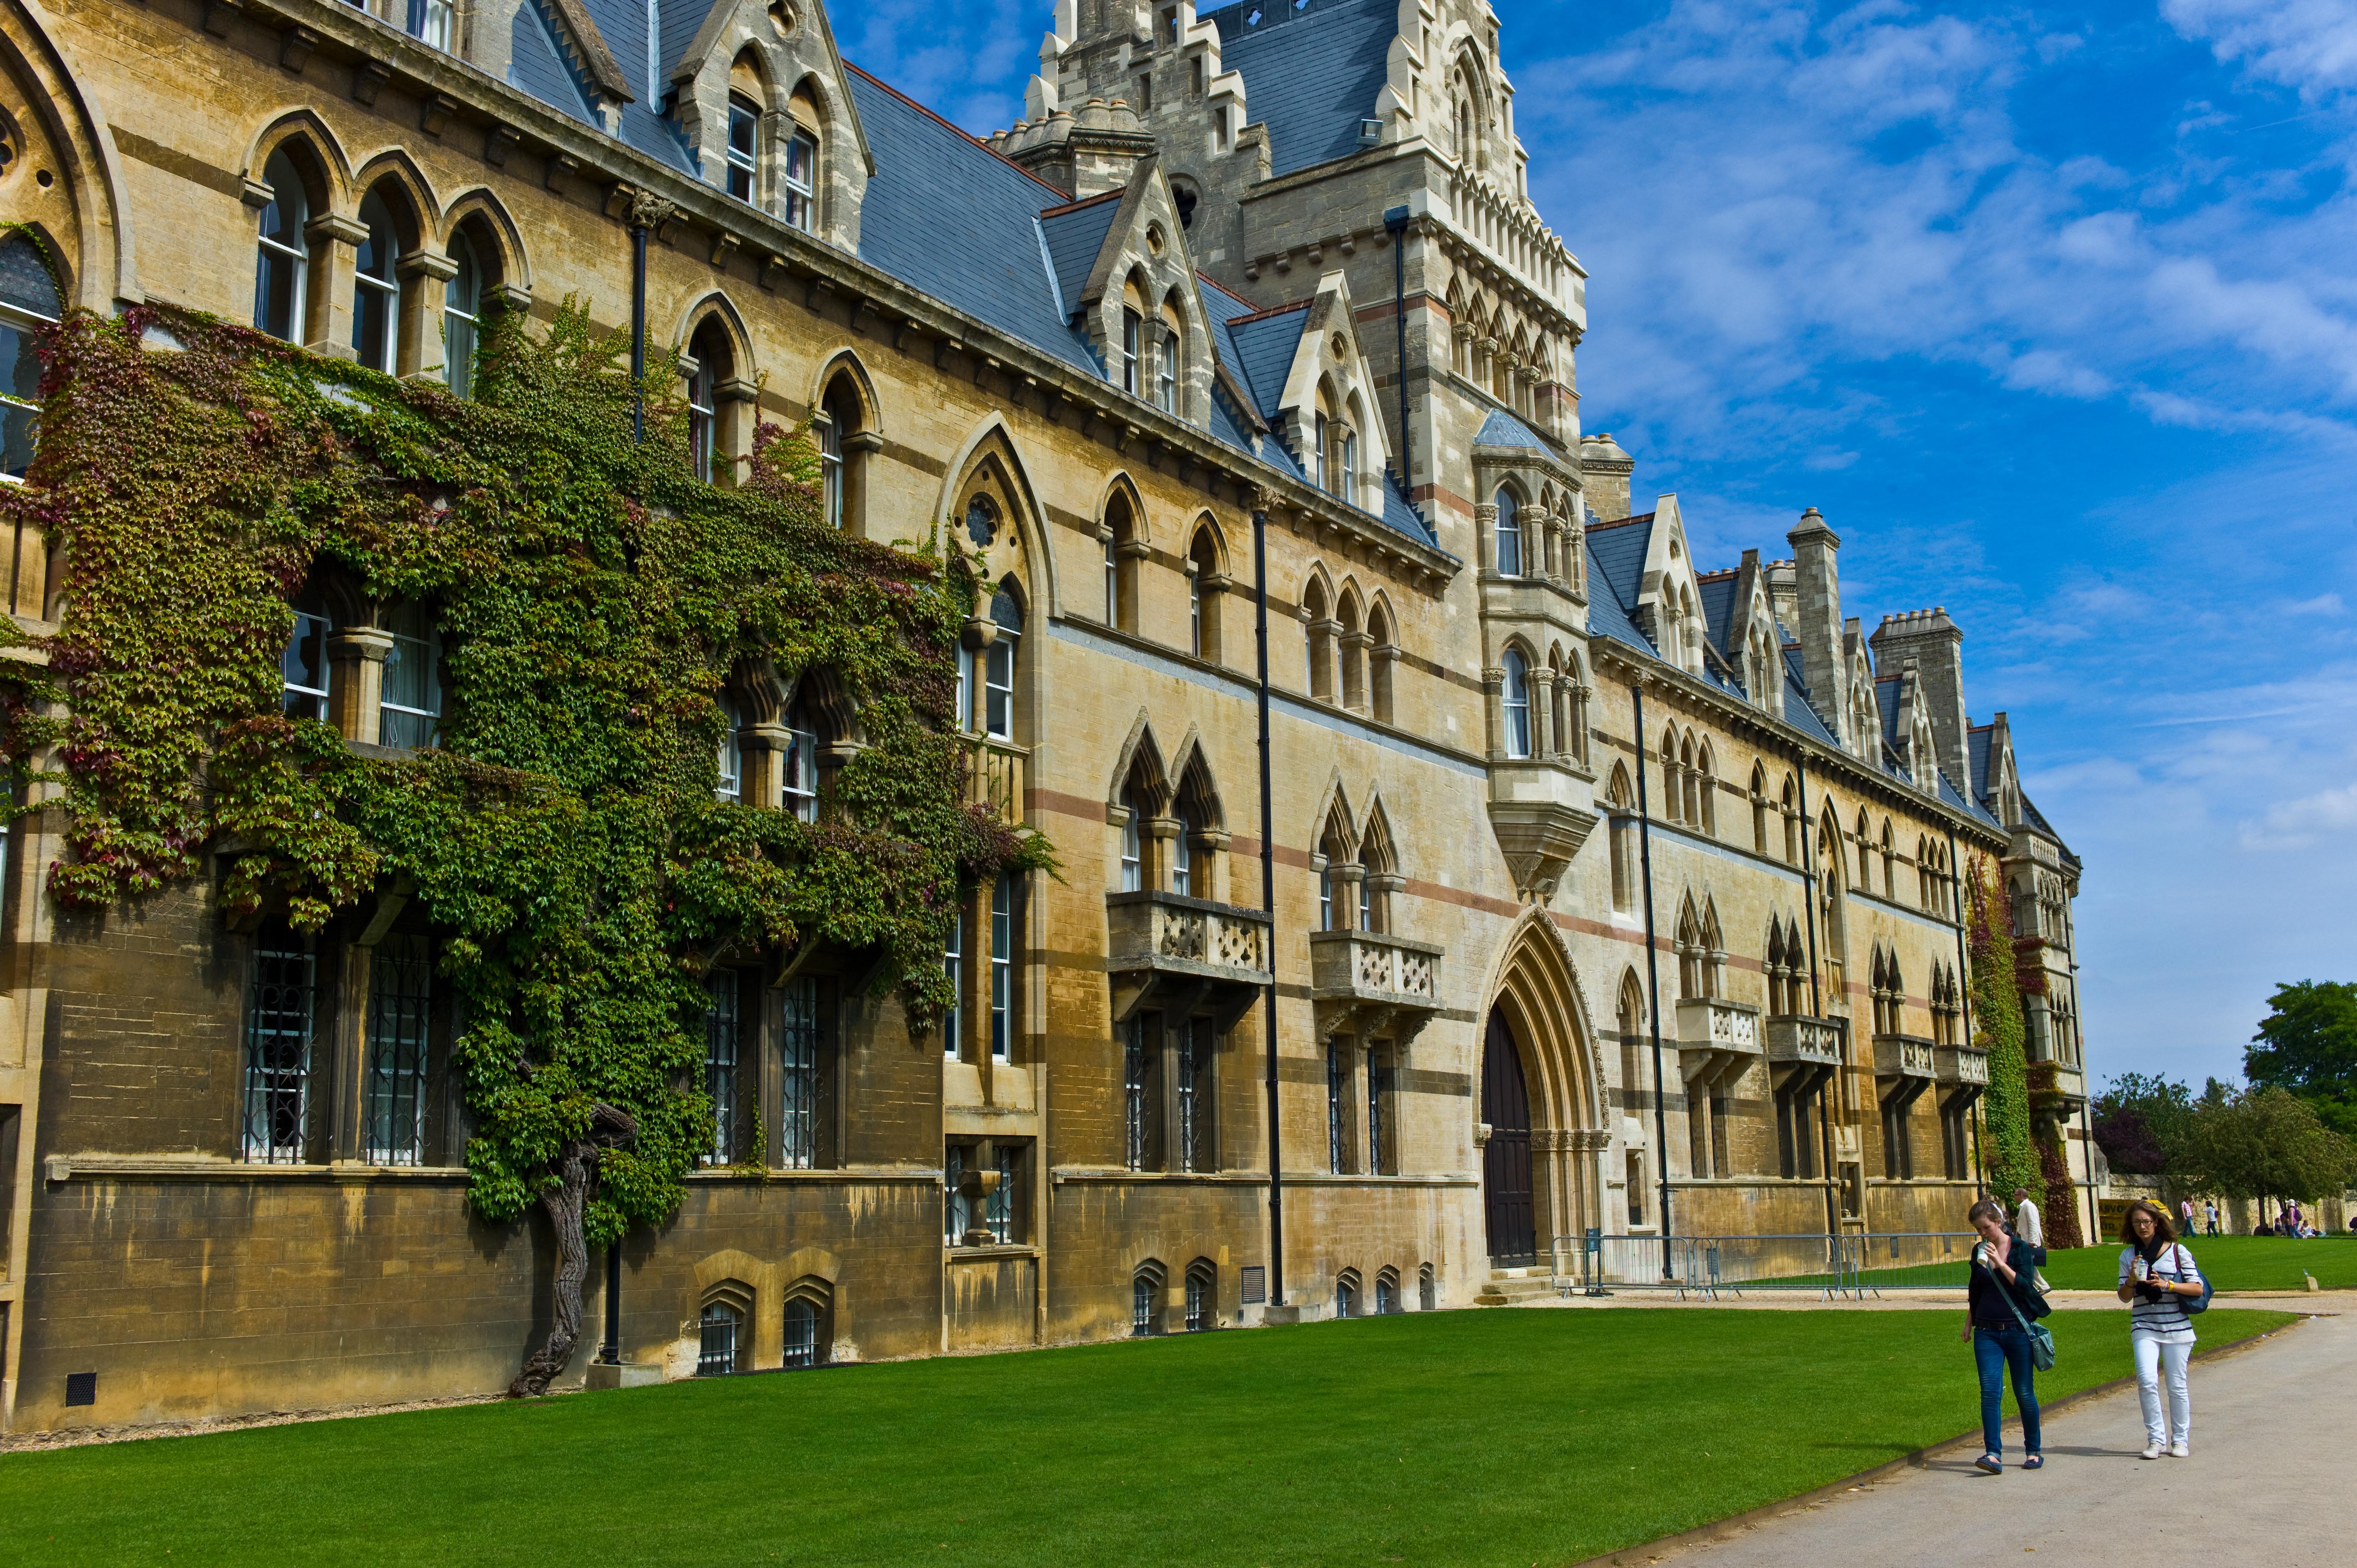 Cambridge university was founded. Оксфорд Англия университет. Великобритания • Оксфордский университет — Англия. Университетский колледж Оксфорд. Сити-оф-Оксфорд университет.